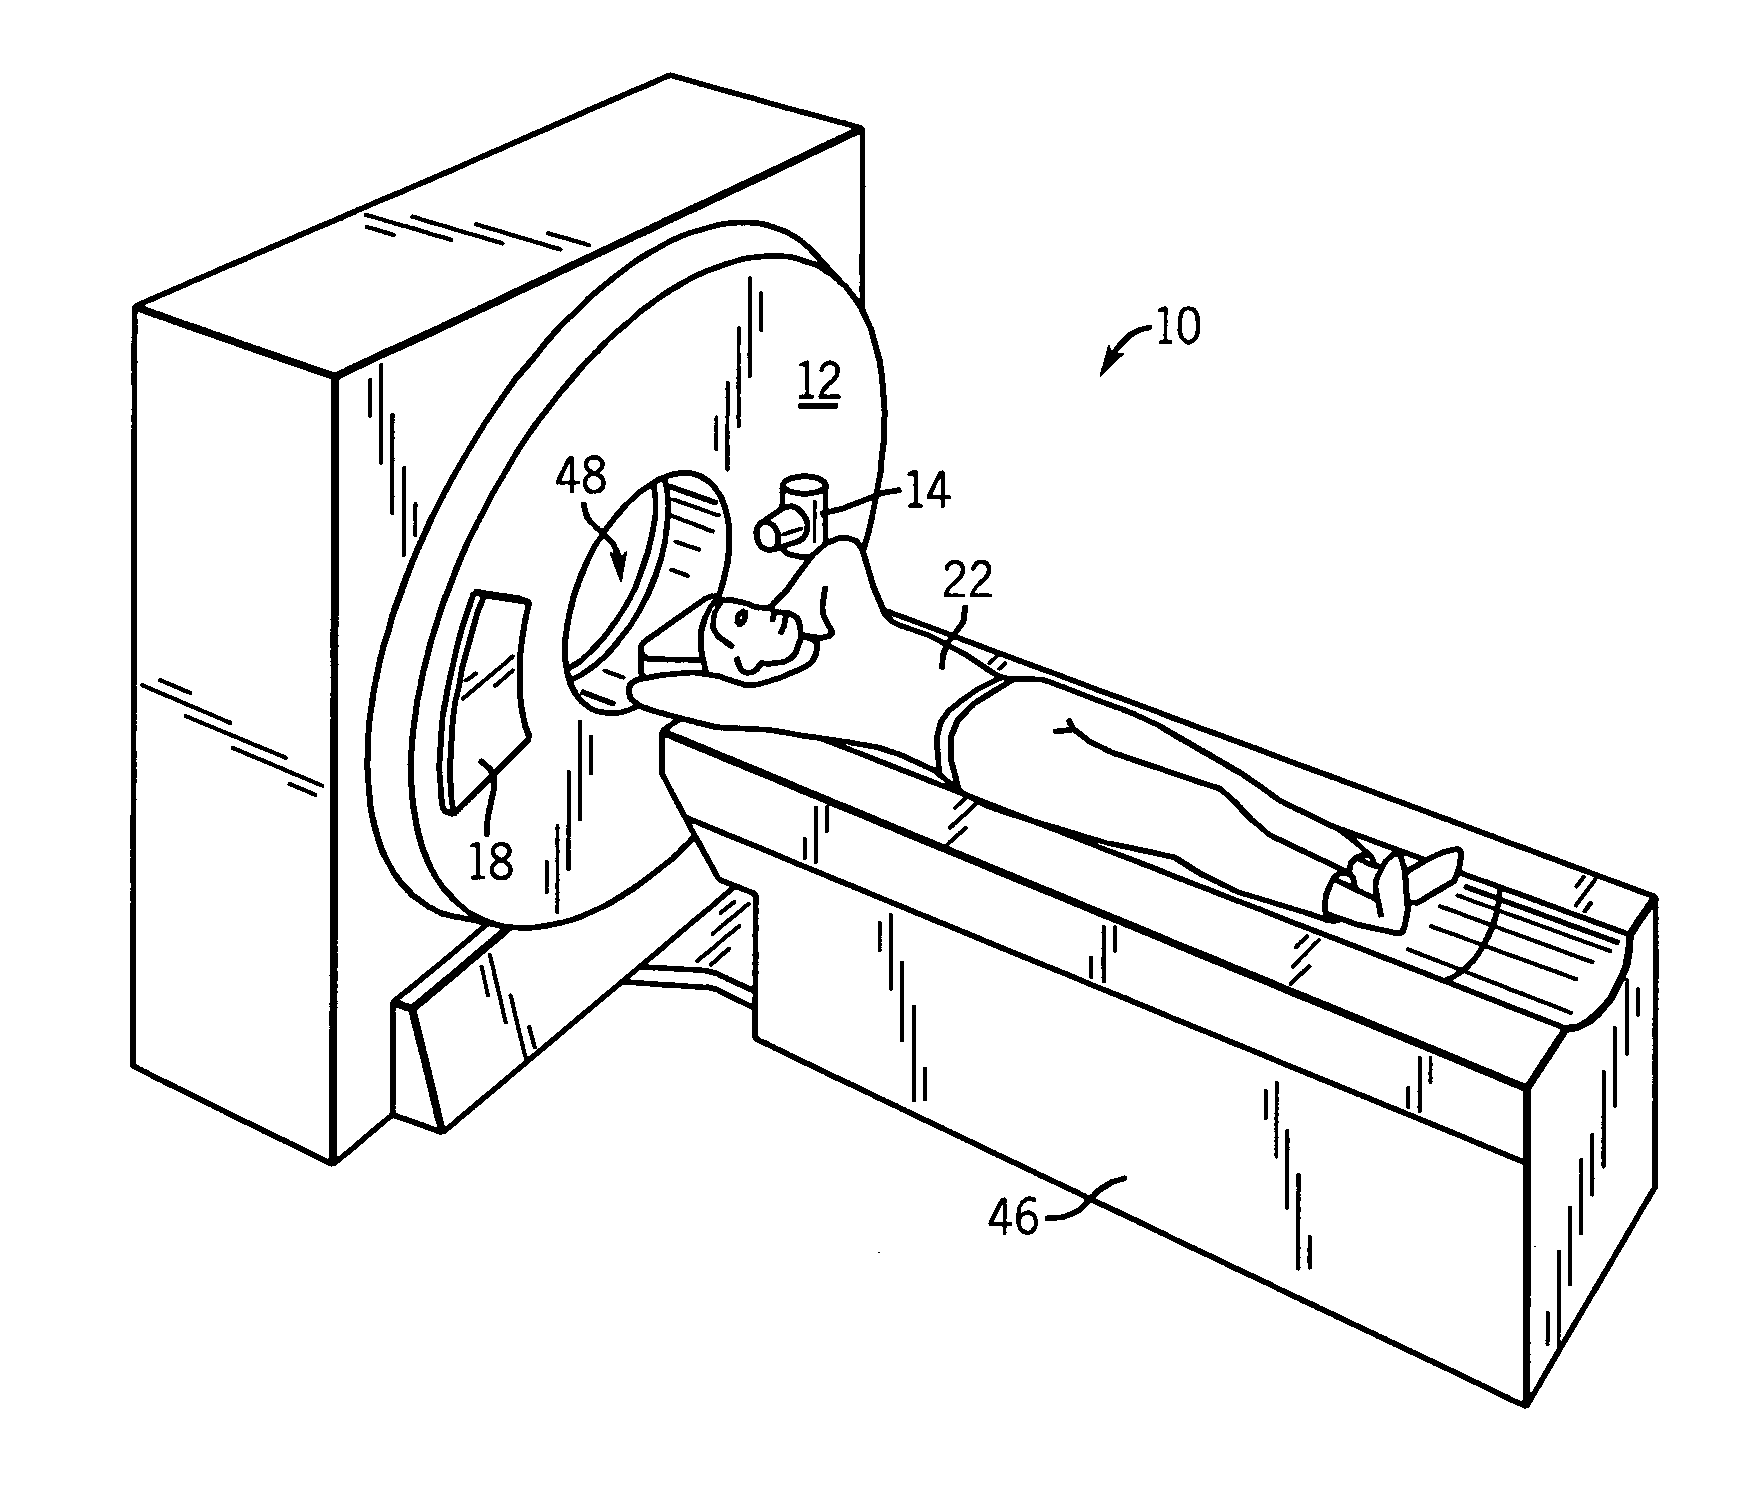 CT detector fabrication process